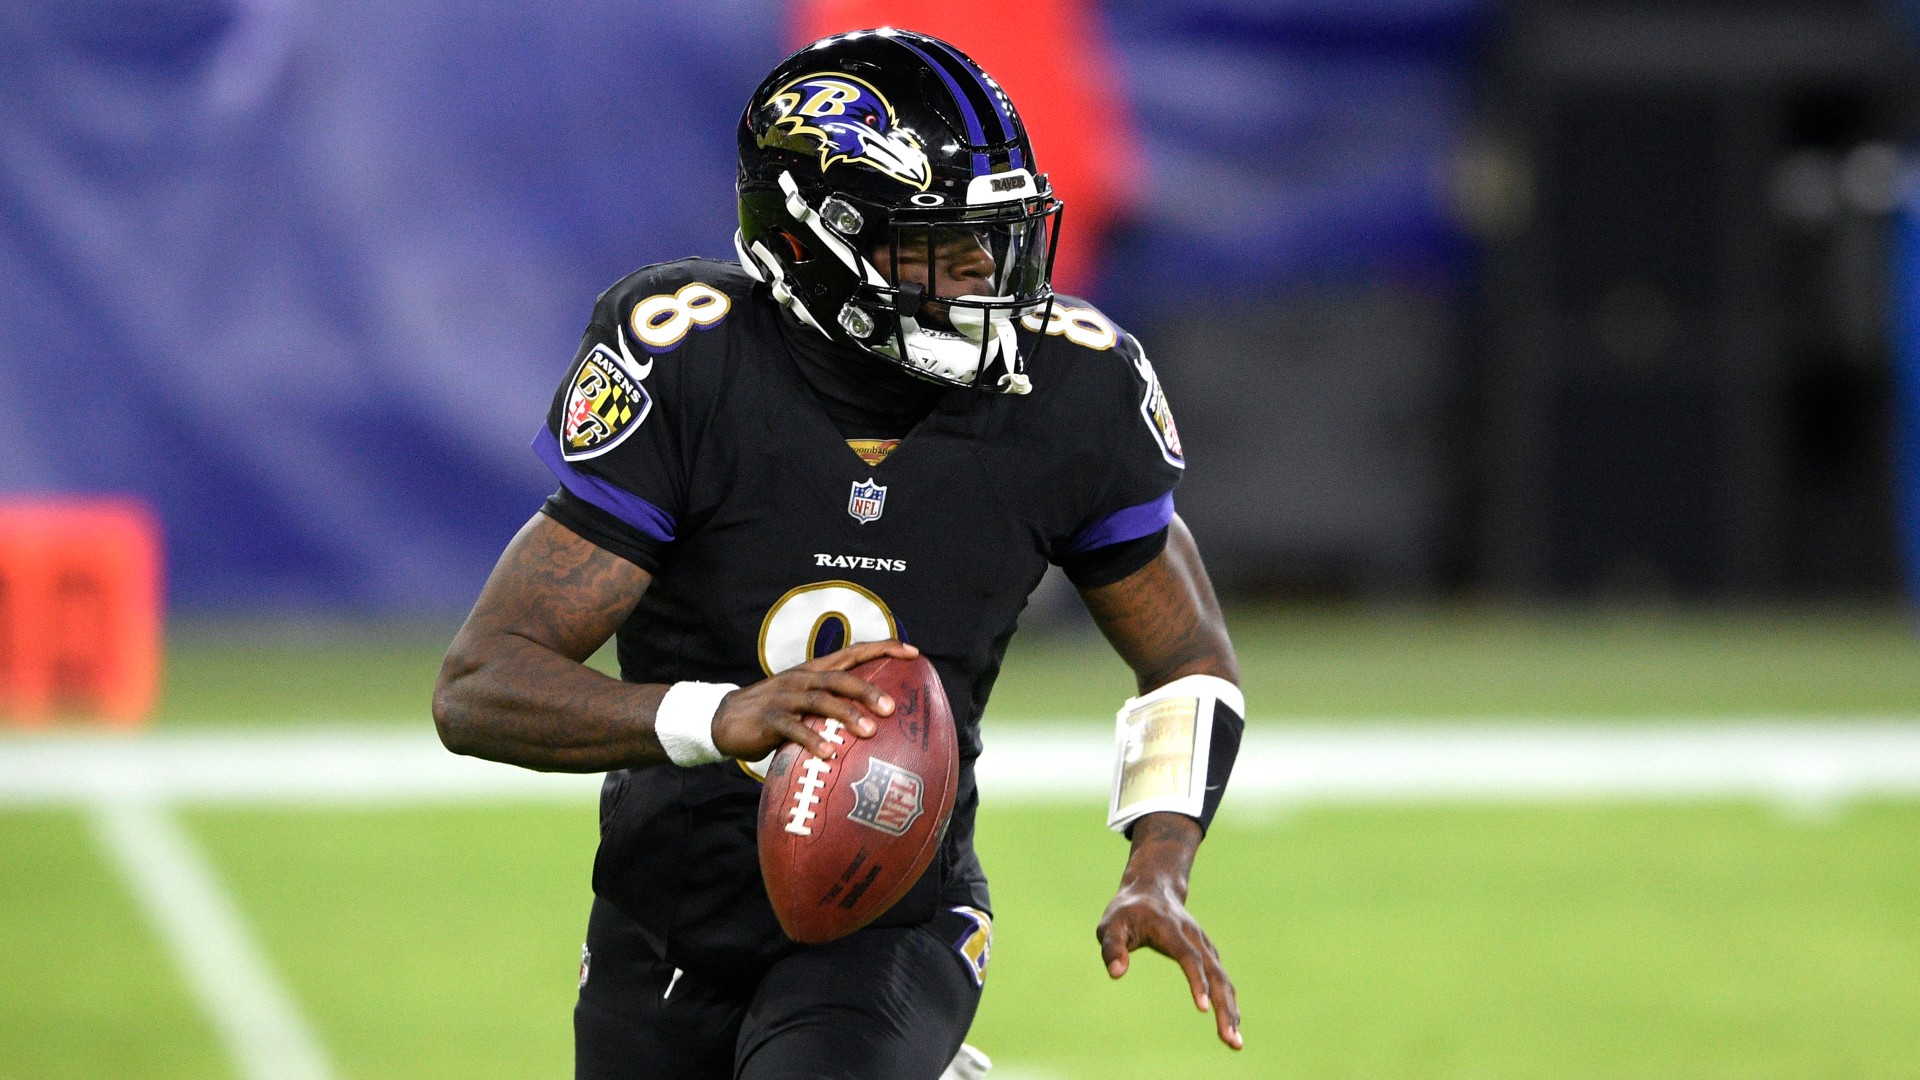 Ravens quarterback Lamar Jackson tests positive for COVID-19